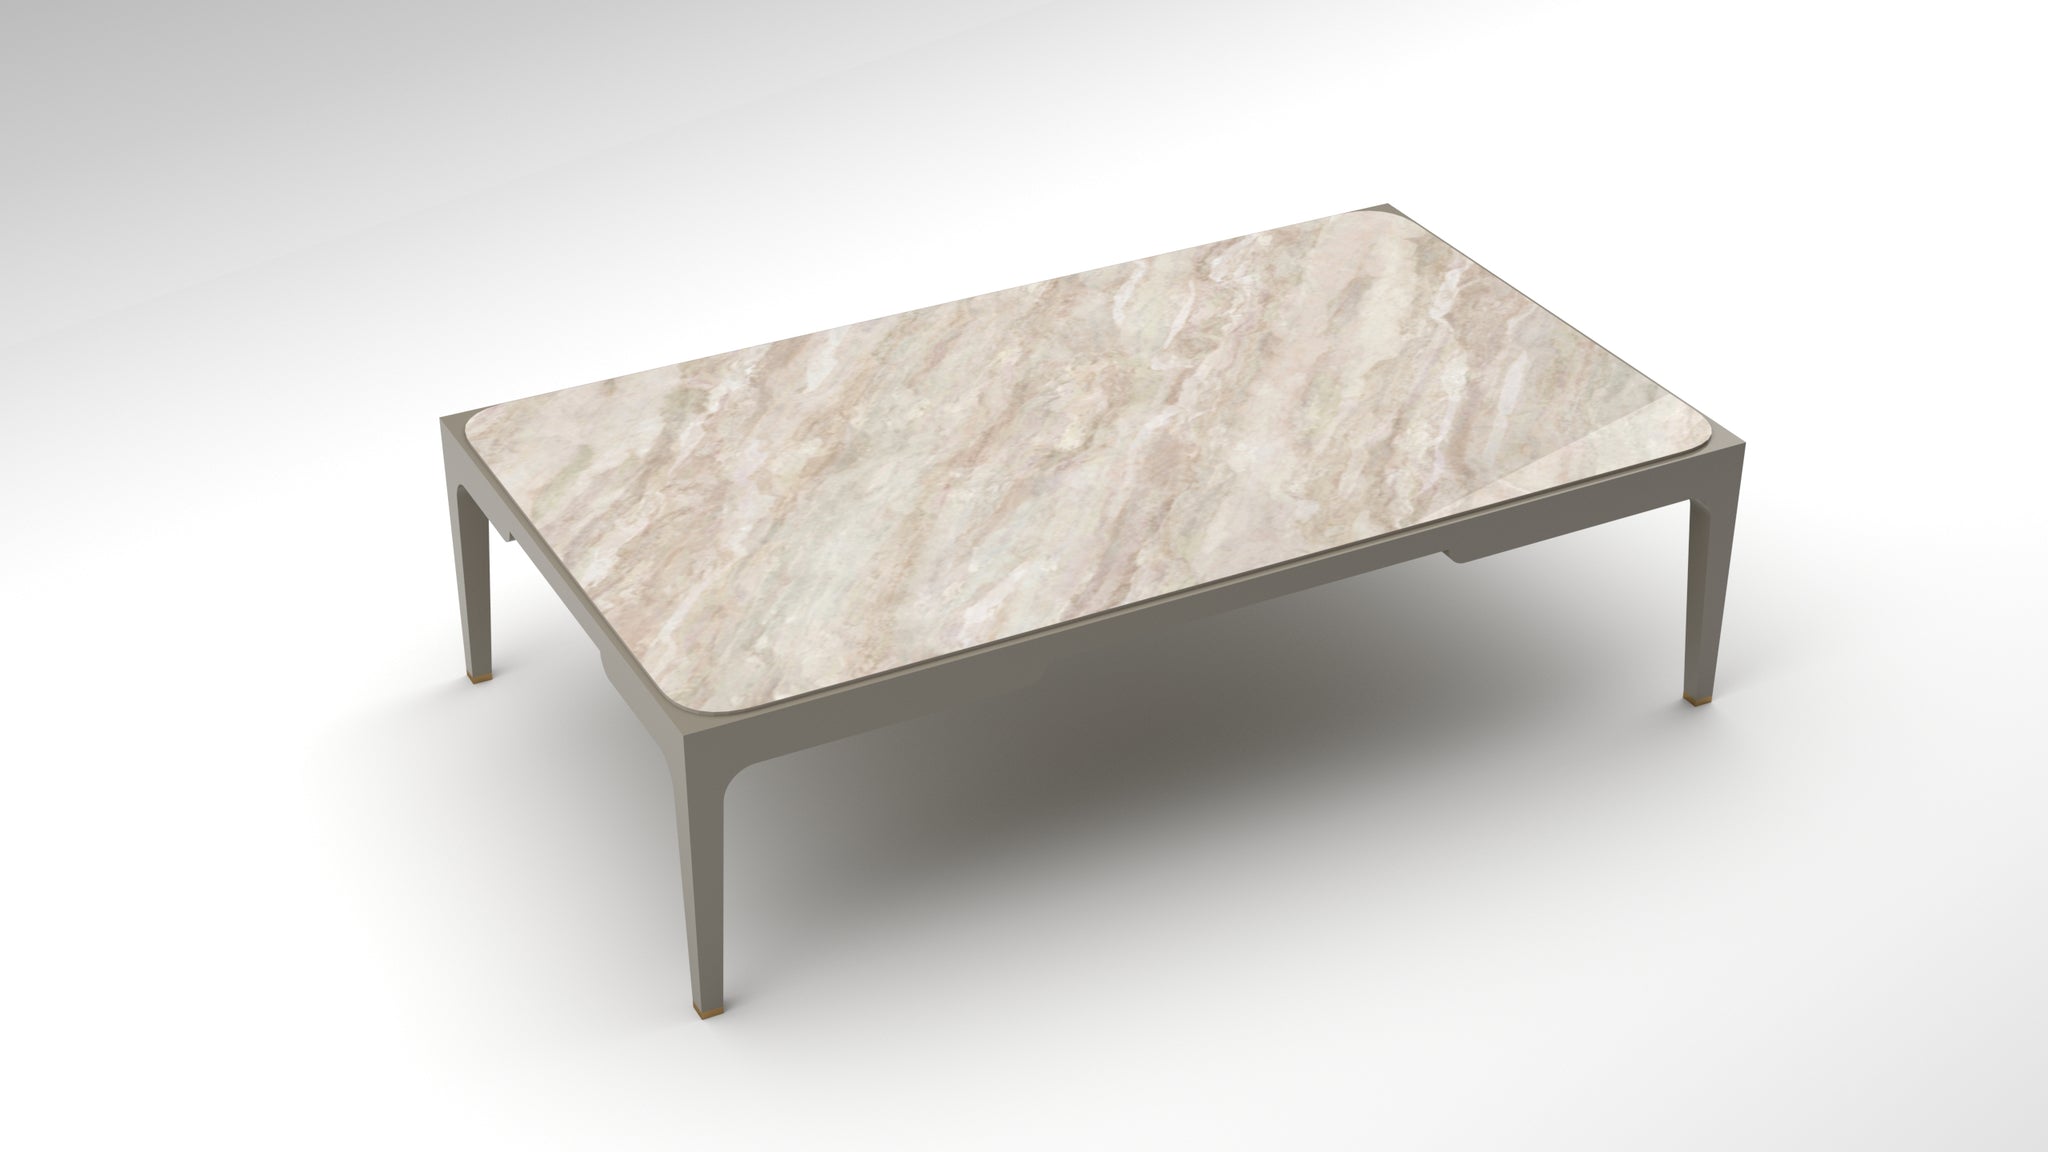 manor akar, manor coffee table, sawar marble, Toronto marble, akar sawar, rectangle coffee table, sawar rectangle, neutral coffee table, solid oak coffee table